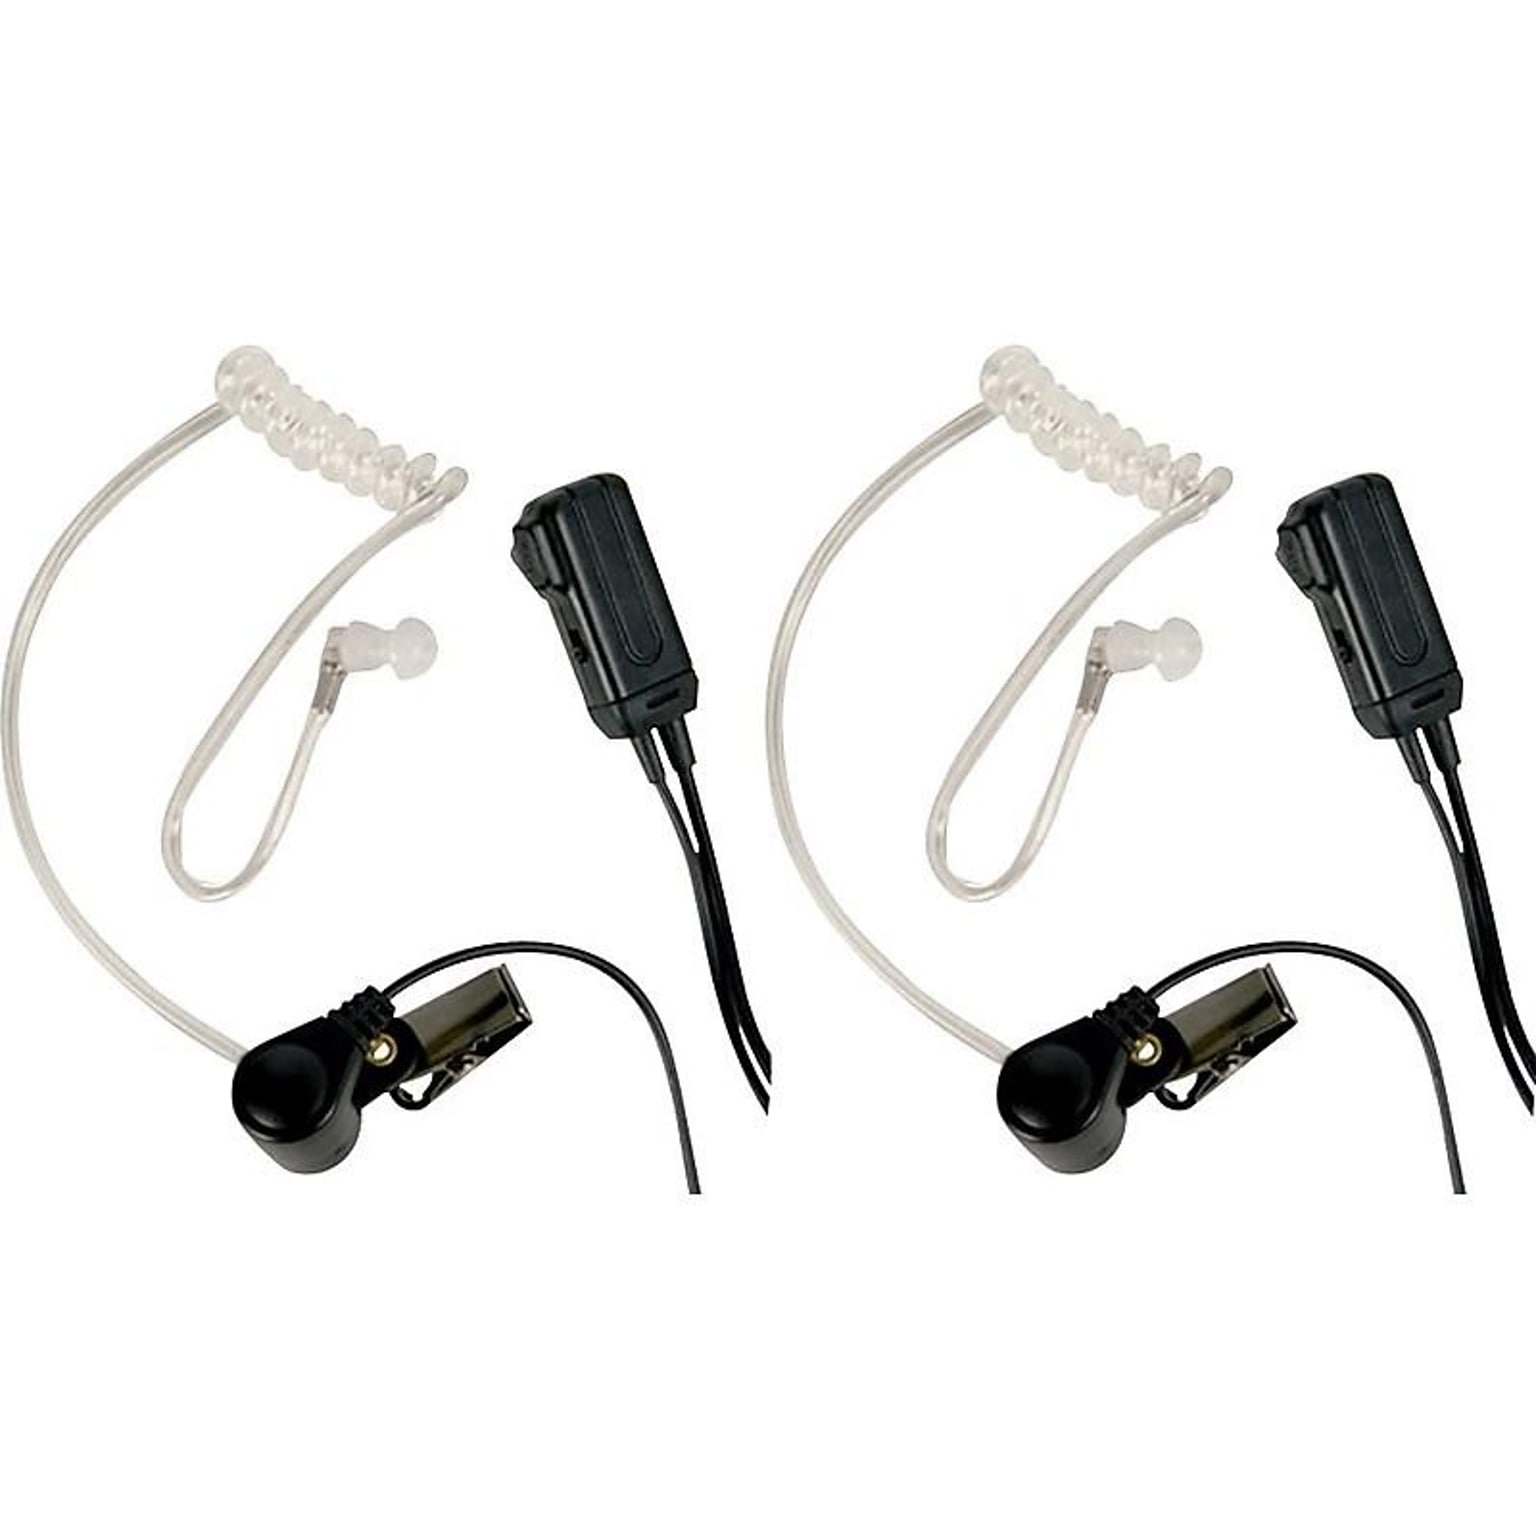 MIDLAND RADIO Surveillance Headphones, Transparent/Black, 2/Pack (AVPH3)